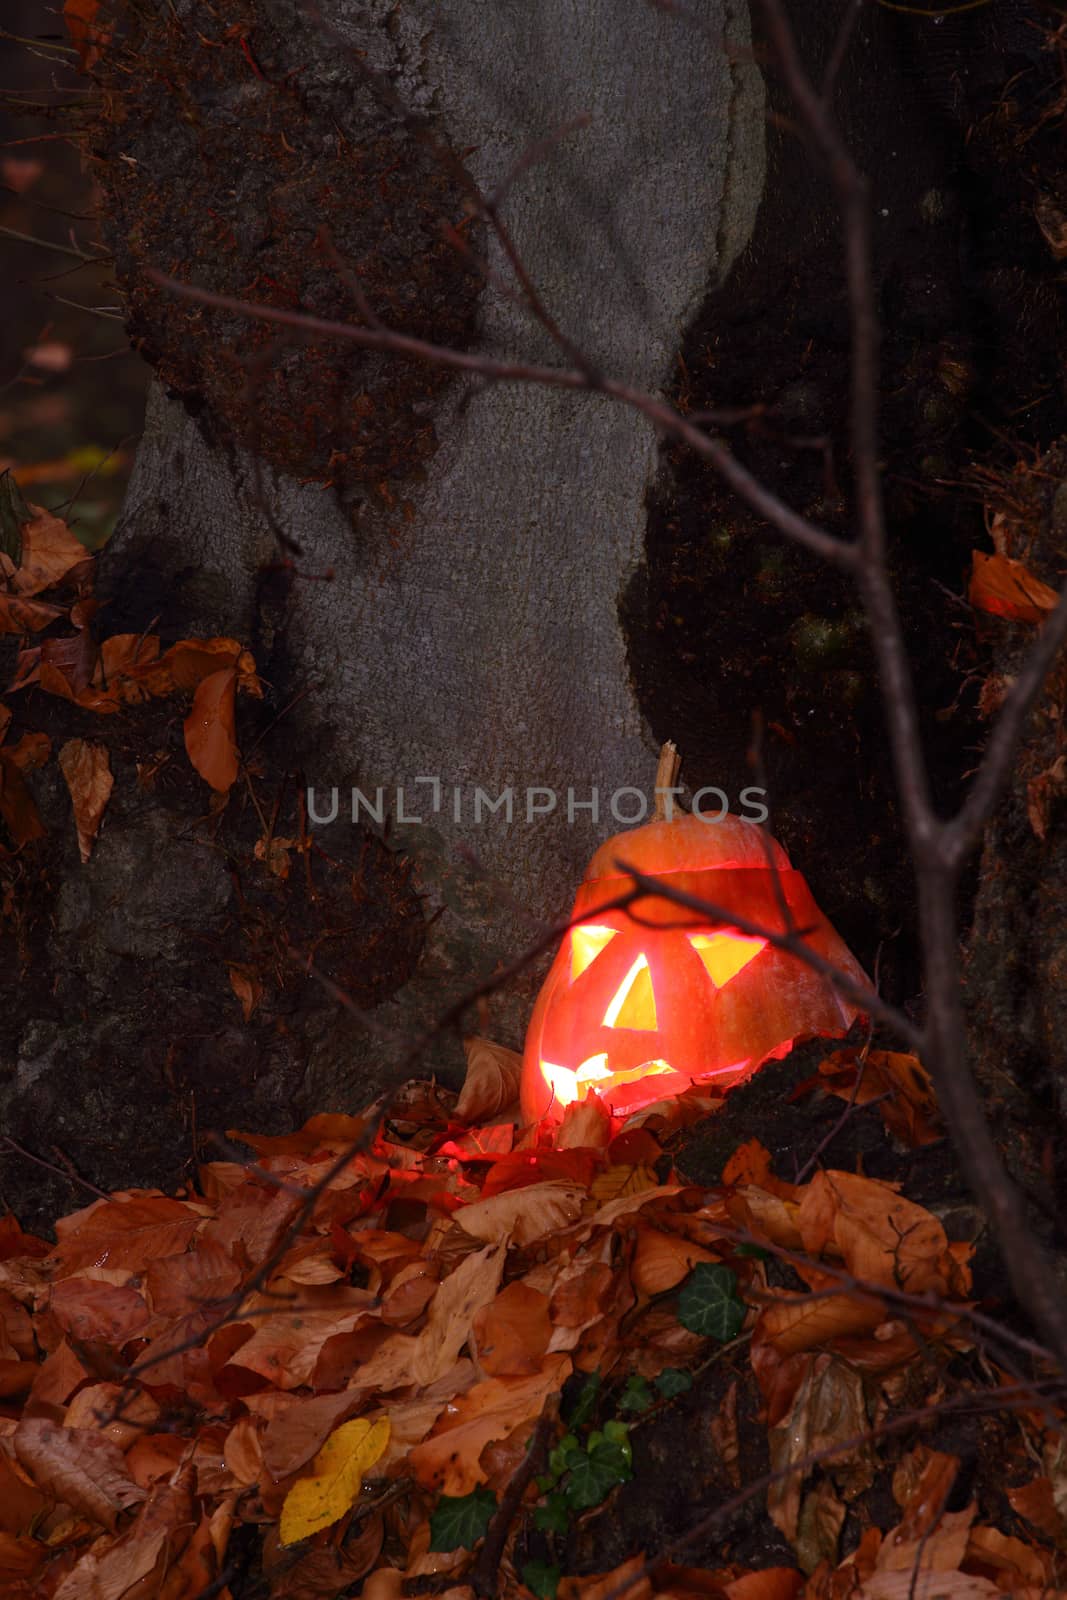 Pumpkin face for halloween in the dark forest